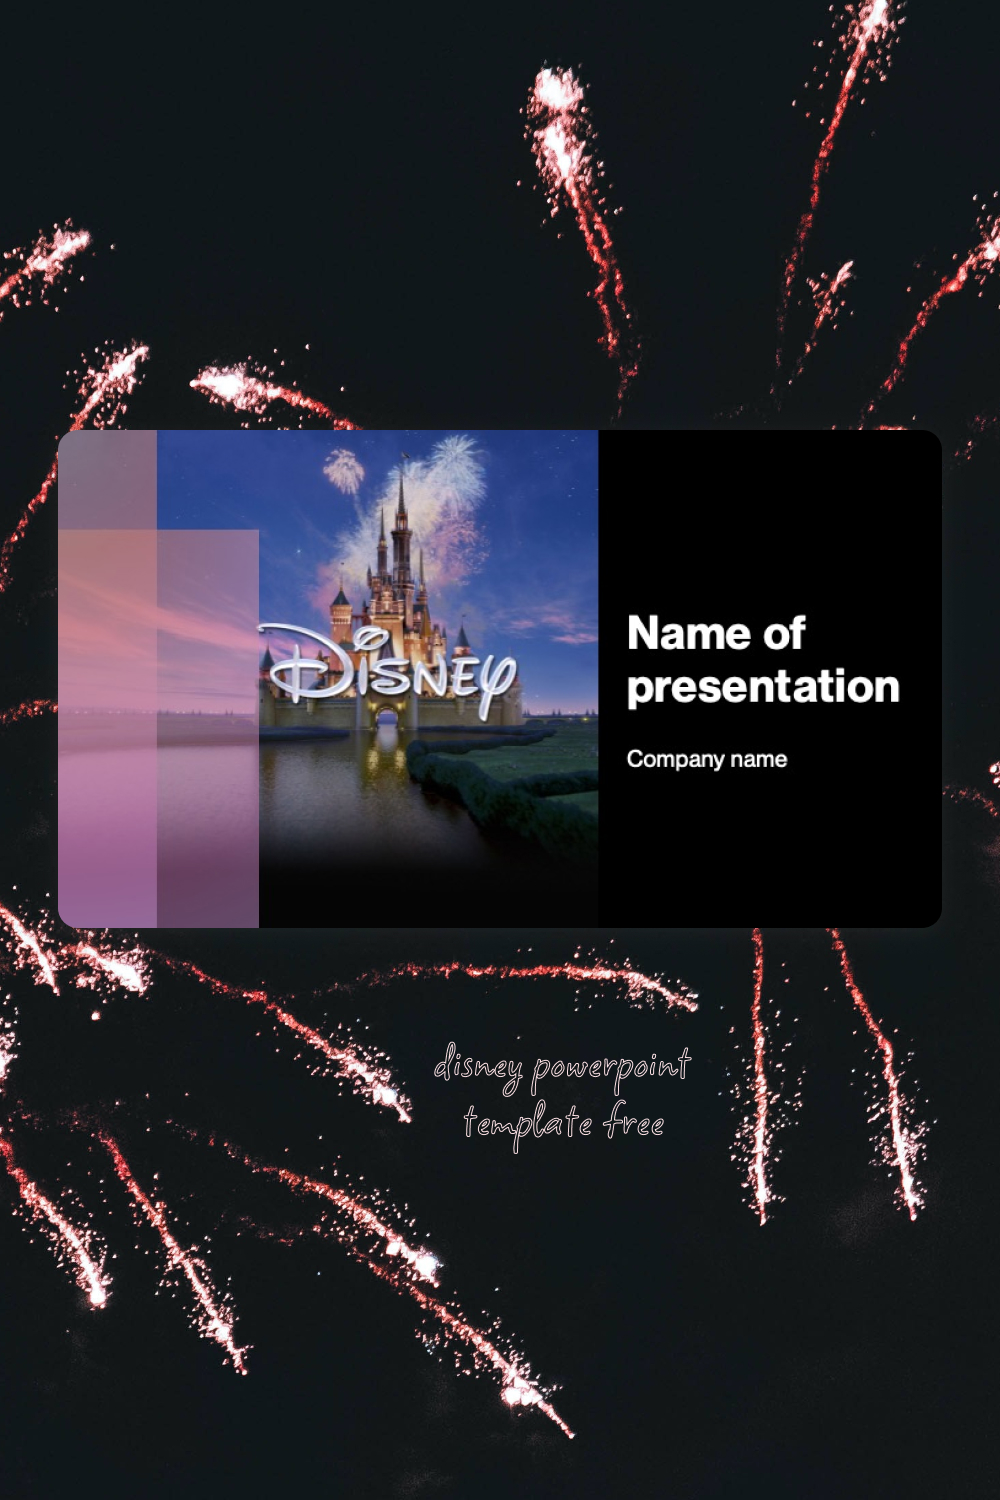 Disney powerpoint template of pinterest.